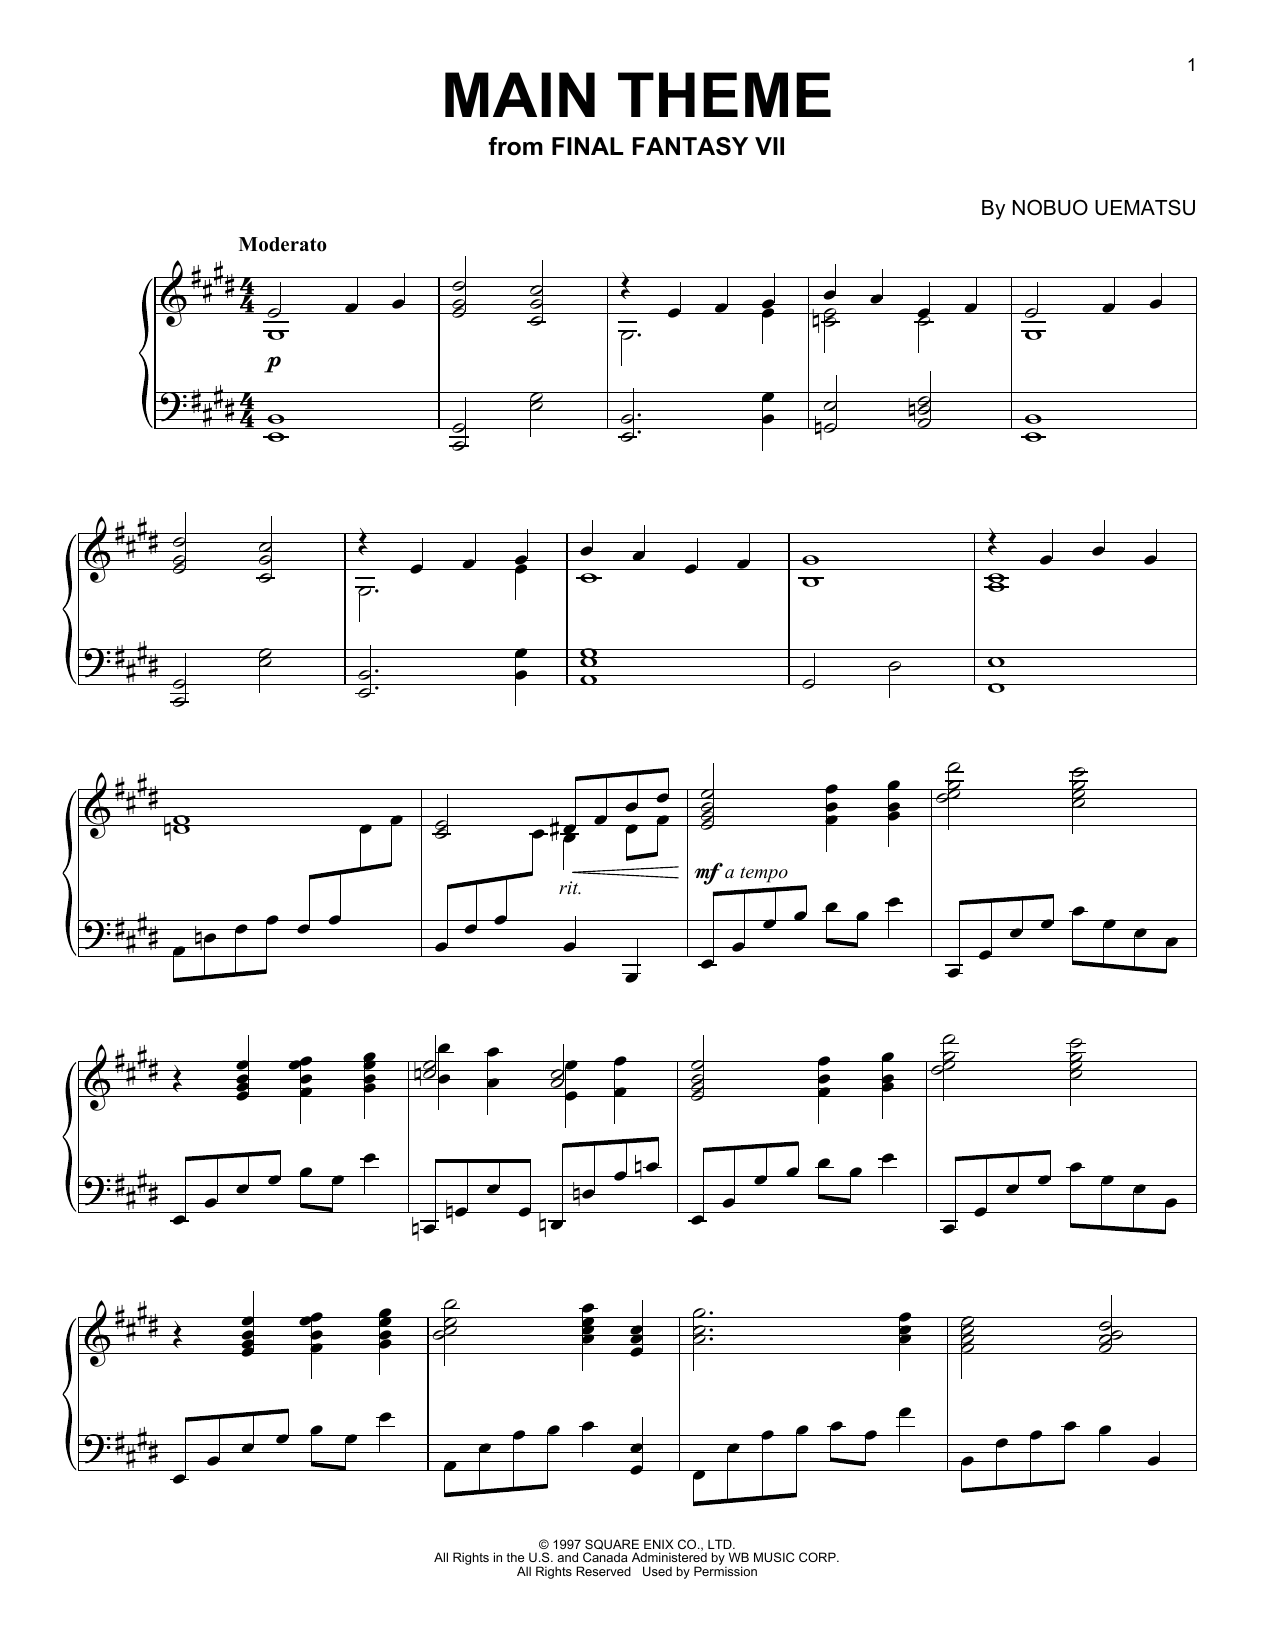 Nobuo Uematsu Main Theme (from Final Fantasy VII) Sheet Music Notes & Chords for Piano - Download or Print PDF